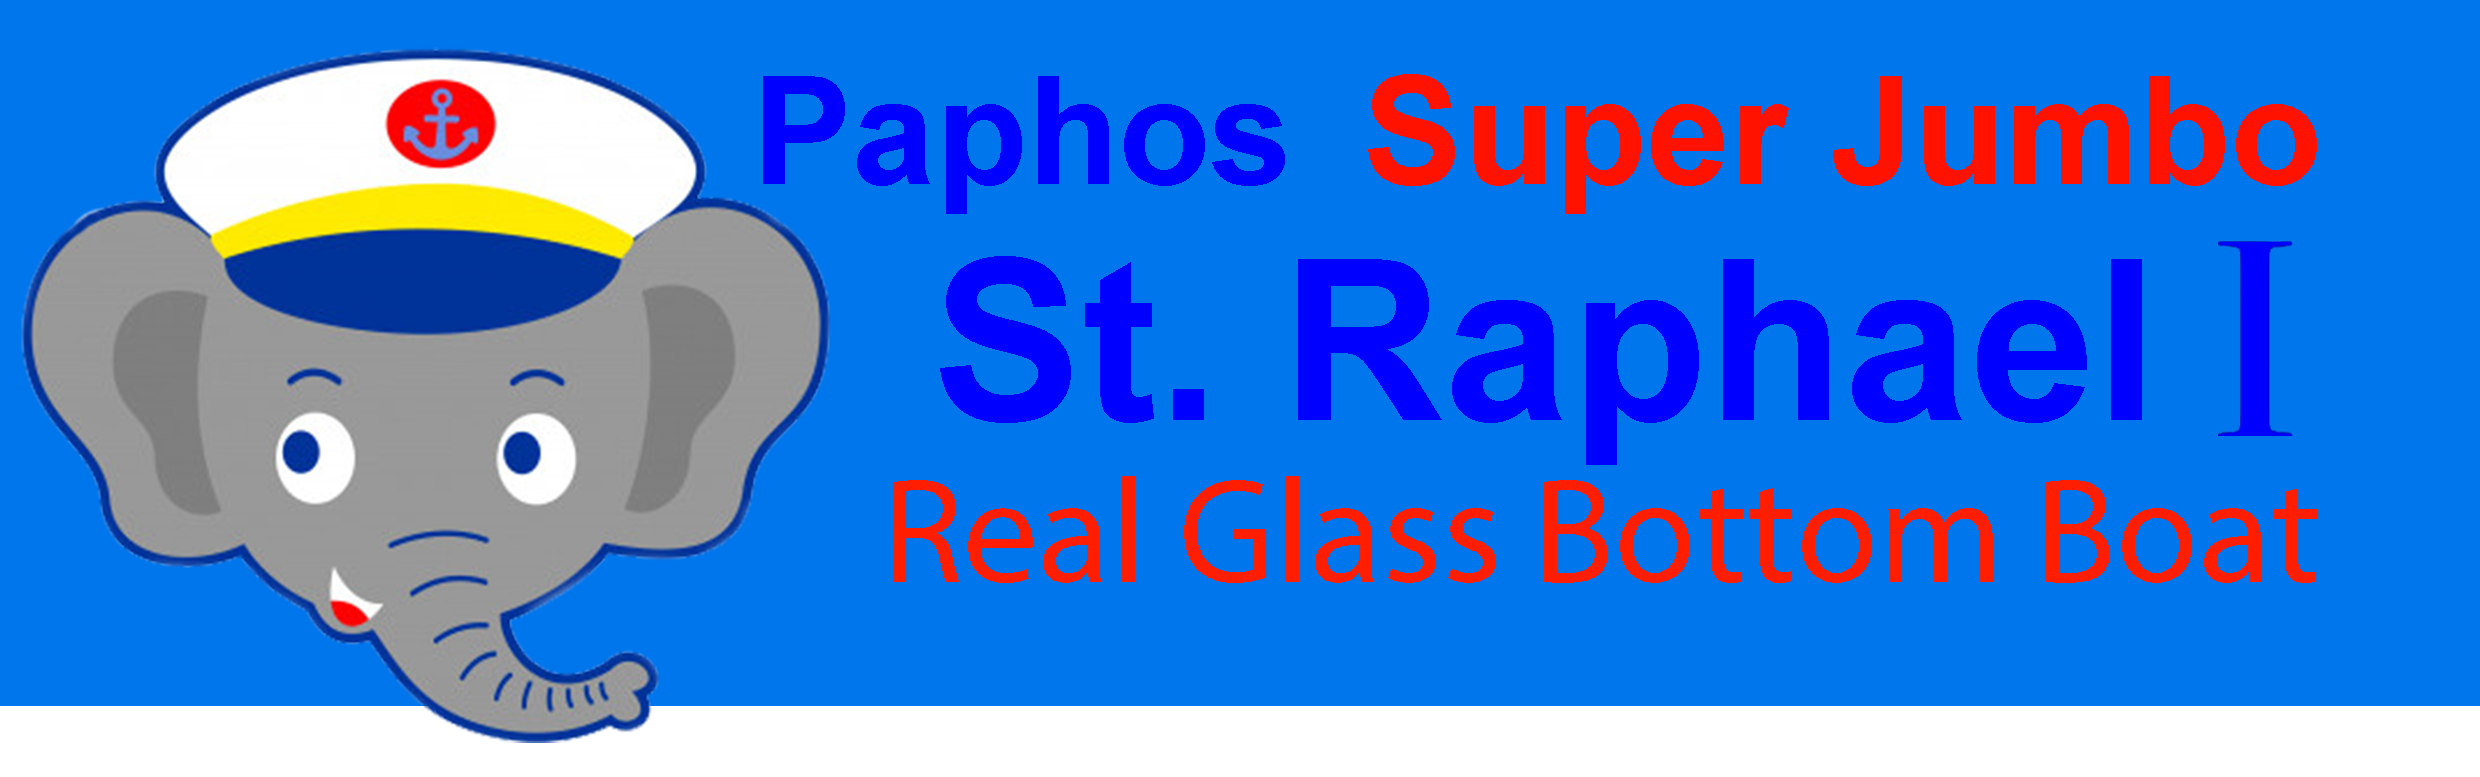 Paphos Super Jumbo St. Raphael I Real Glass Bottom Boat